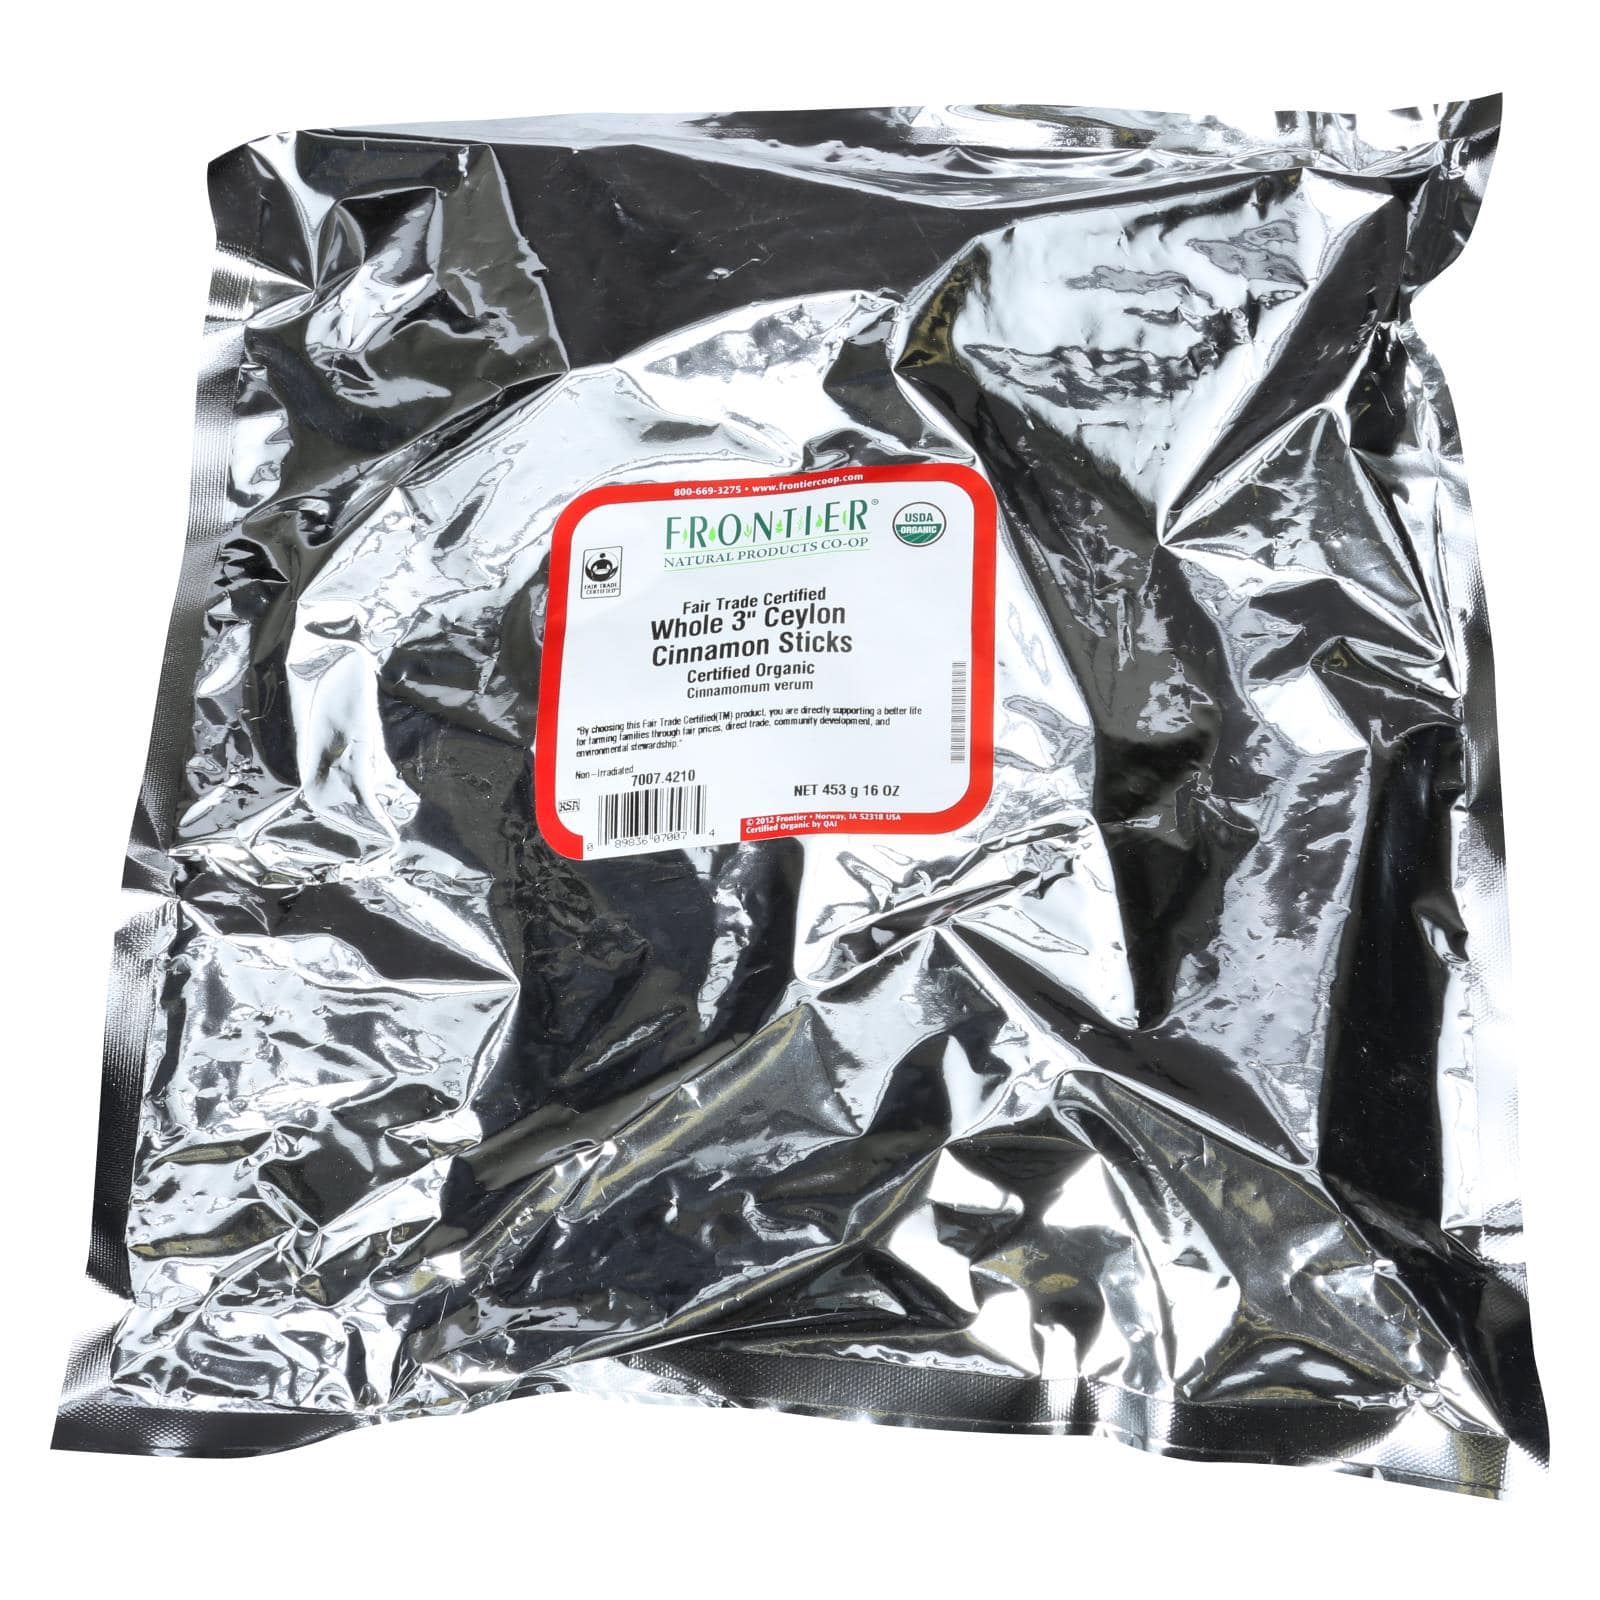 Buy Frontier Herb Cinnamon Organic Fair Trade Certified Sticks 3 In Ceylon - Single Bulk Item - 1lb  at OnlyNaturals.us